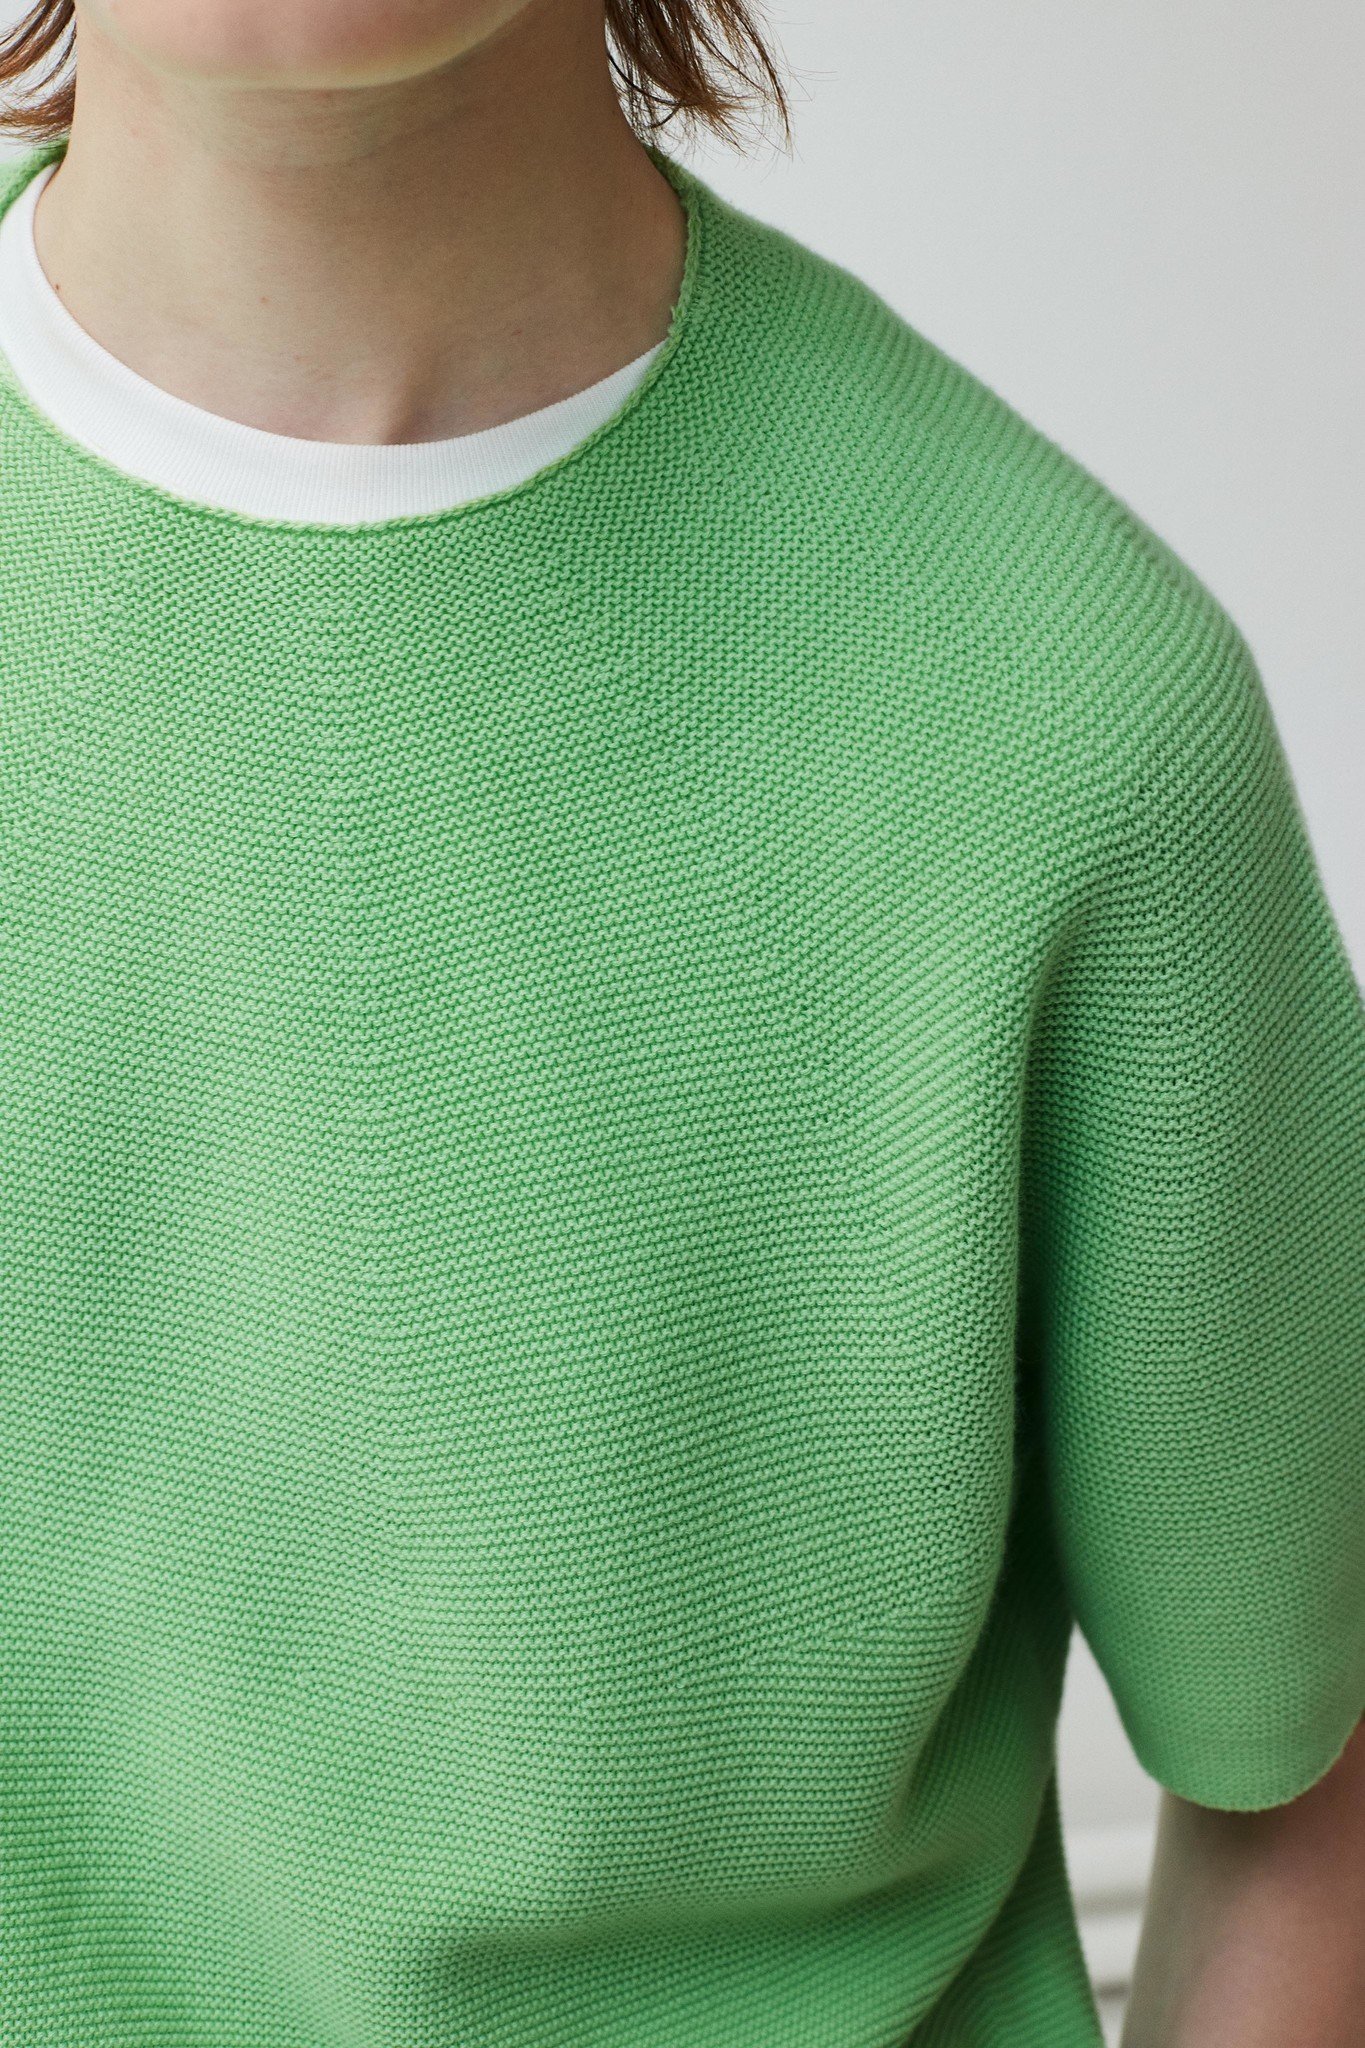 Christian Wijnants - Karimo whole garment knit sweater